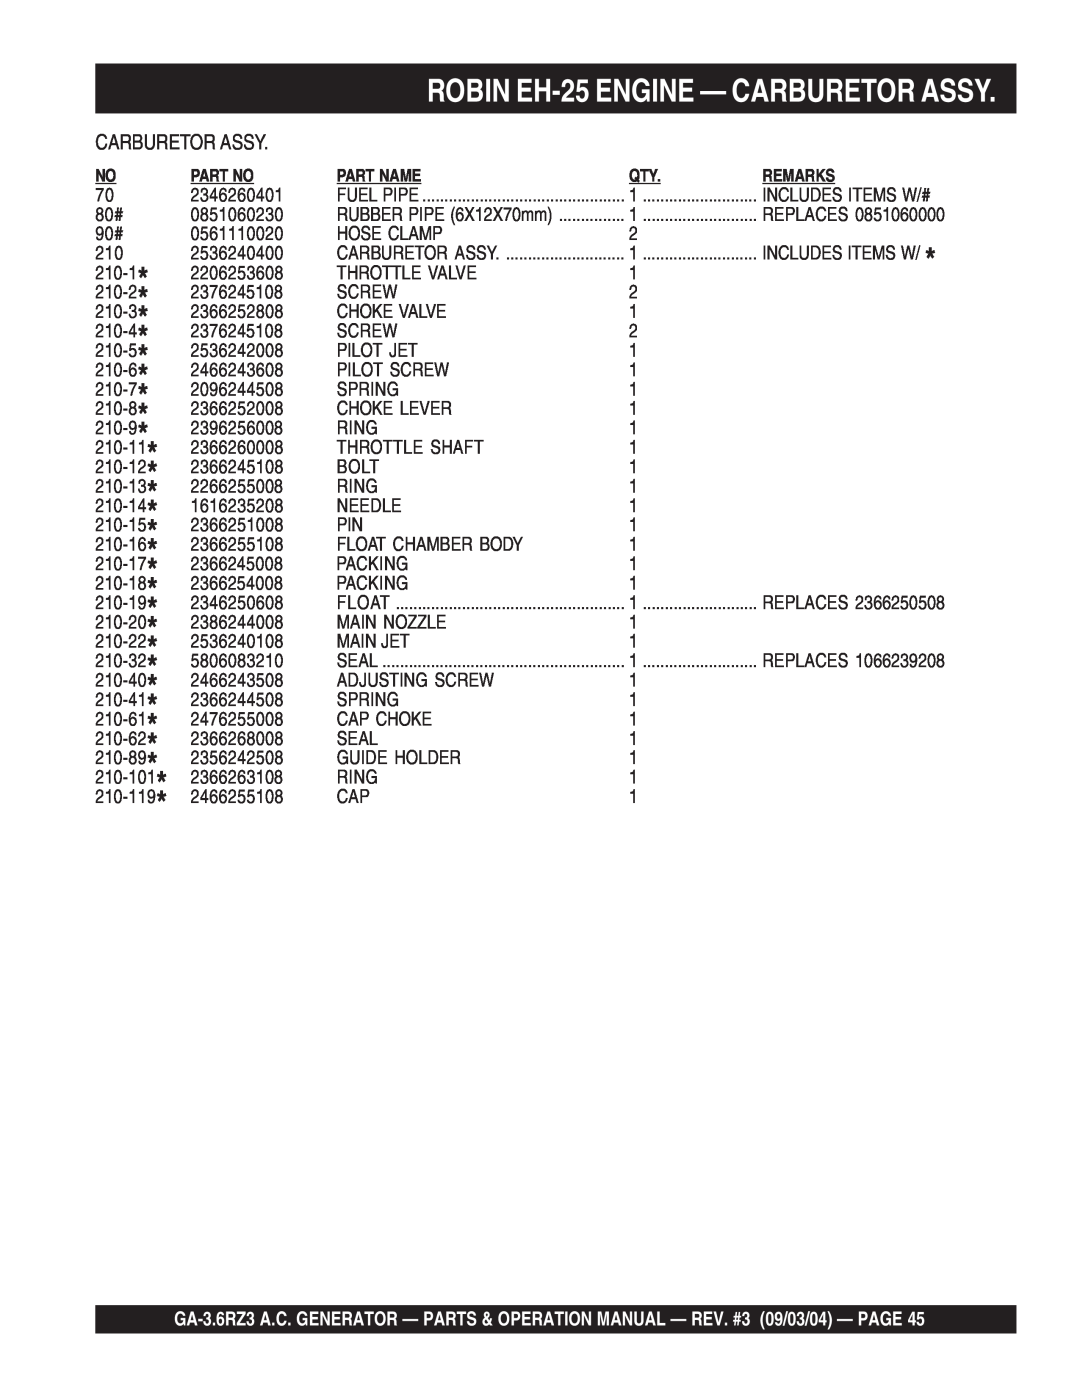 Multiquip GA-3.6RZ3 operation manual ROBIN EH-25ENGINE — CARBURETOR ASSY, 2346260401 